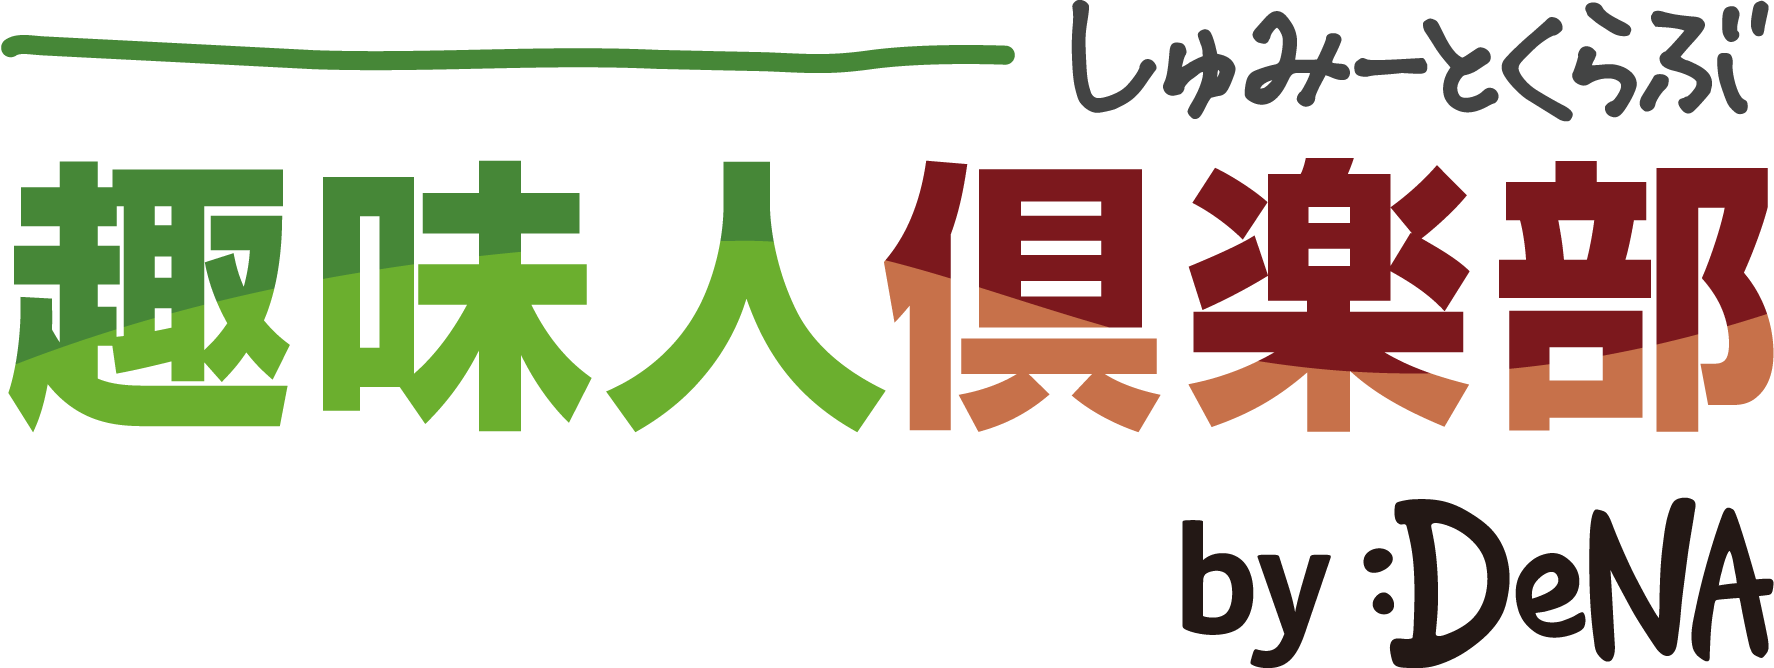 Japan Company Logo - Shumito Club: DeNA's social network for seniors in Japan | THE BRIDGE